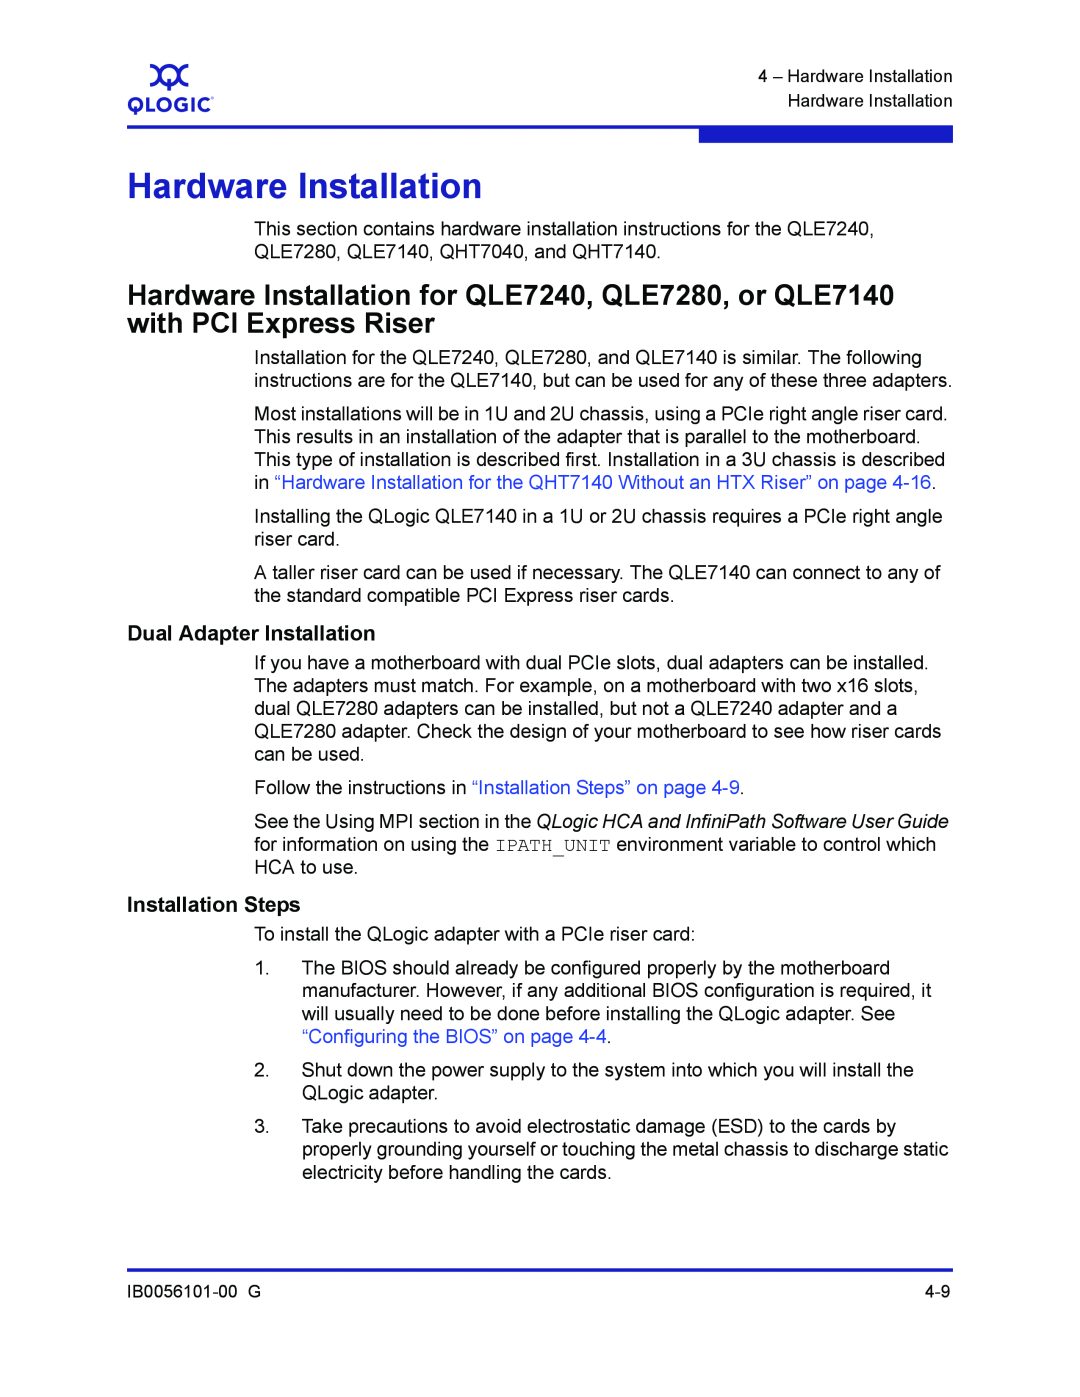 Q-Logic IB0056101-00 G manual Dual Adapter Installation, Installation Steps, Hardware Installation 